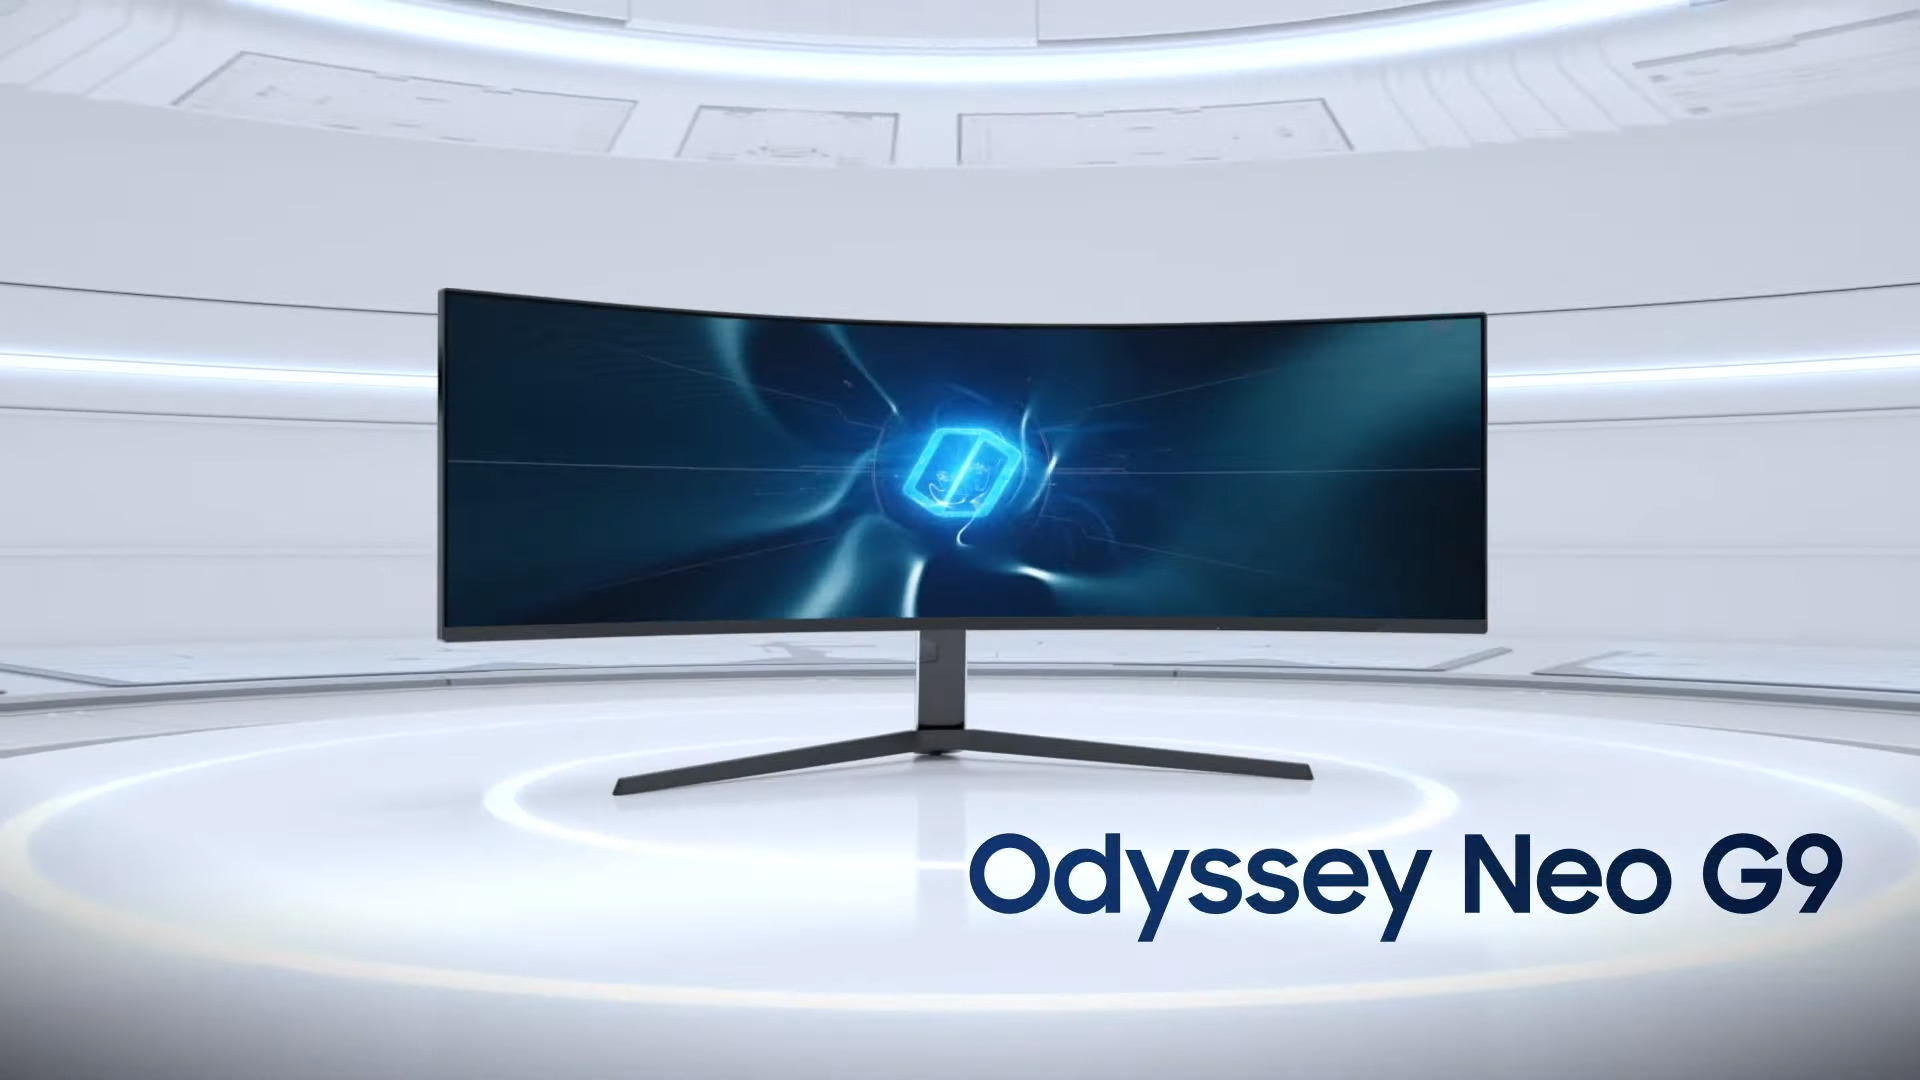 Ecran PC Samsung Odyssey OLED G9 49″ – Cybertech